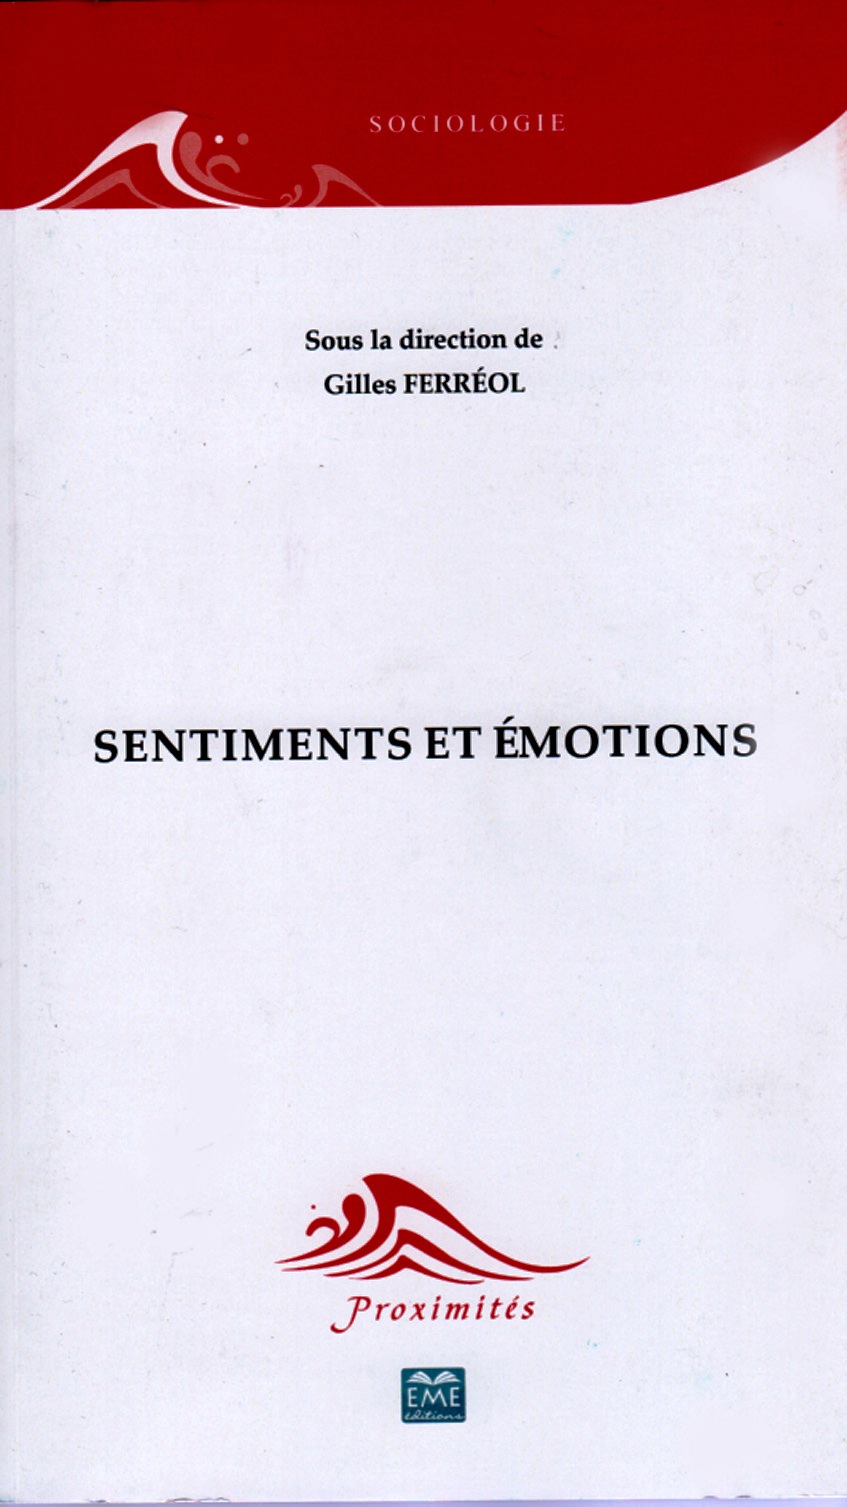 Jolle Deniot in G Ferrol Sentiments et motions Besanon 2015